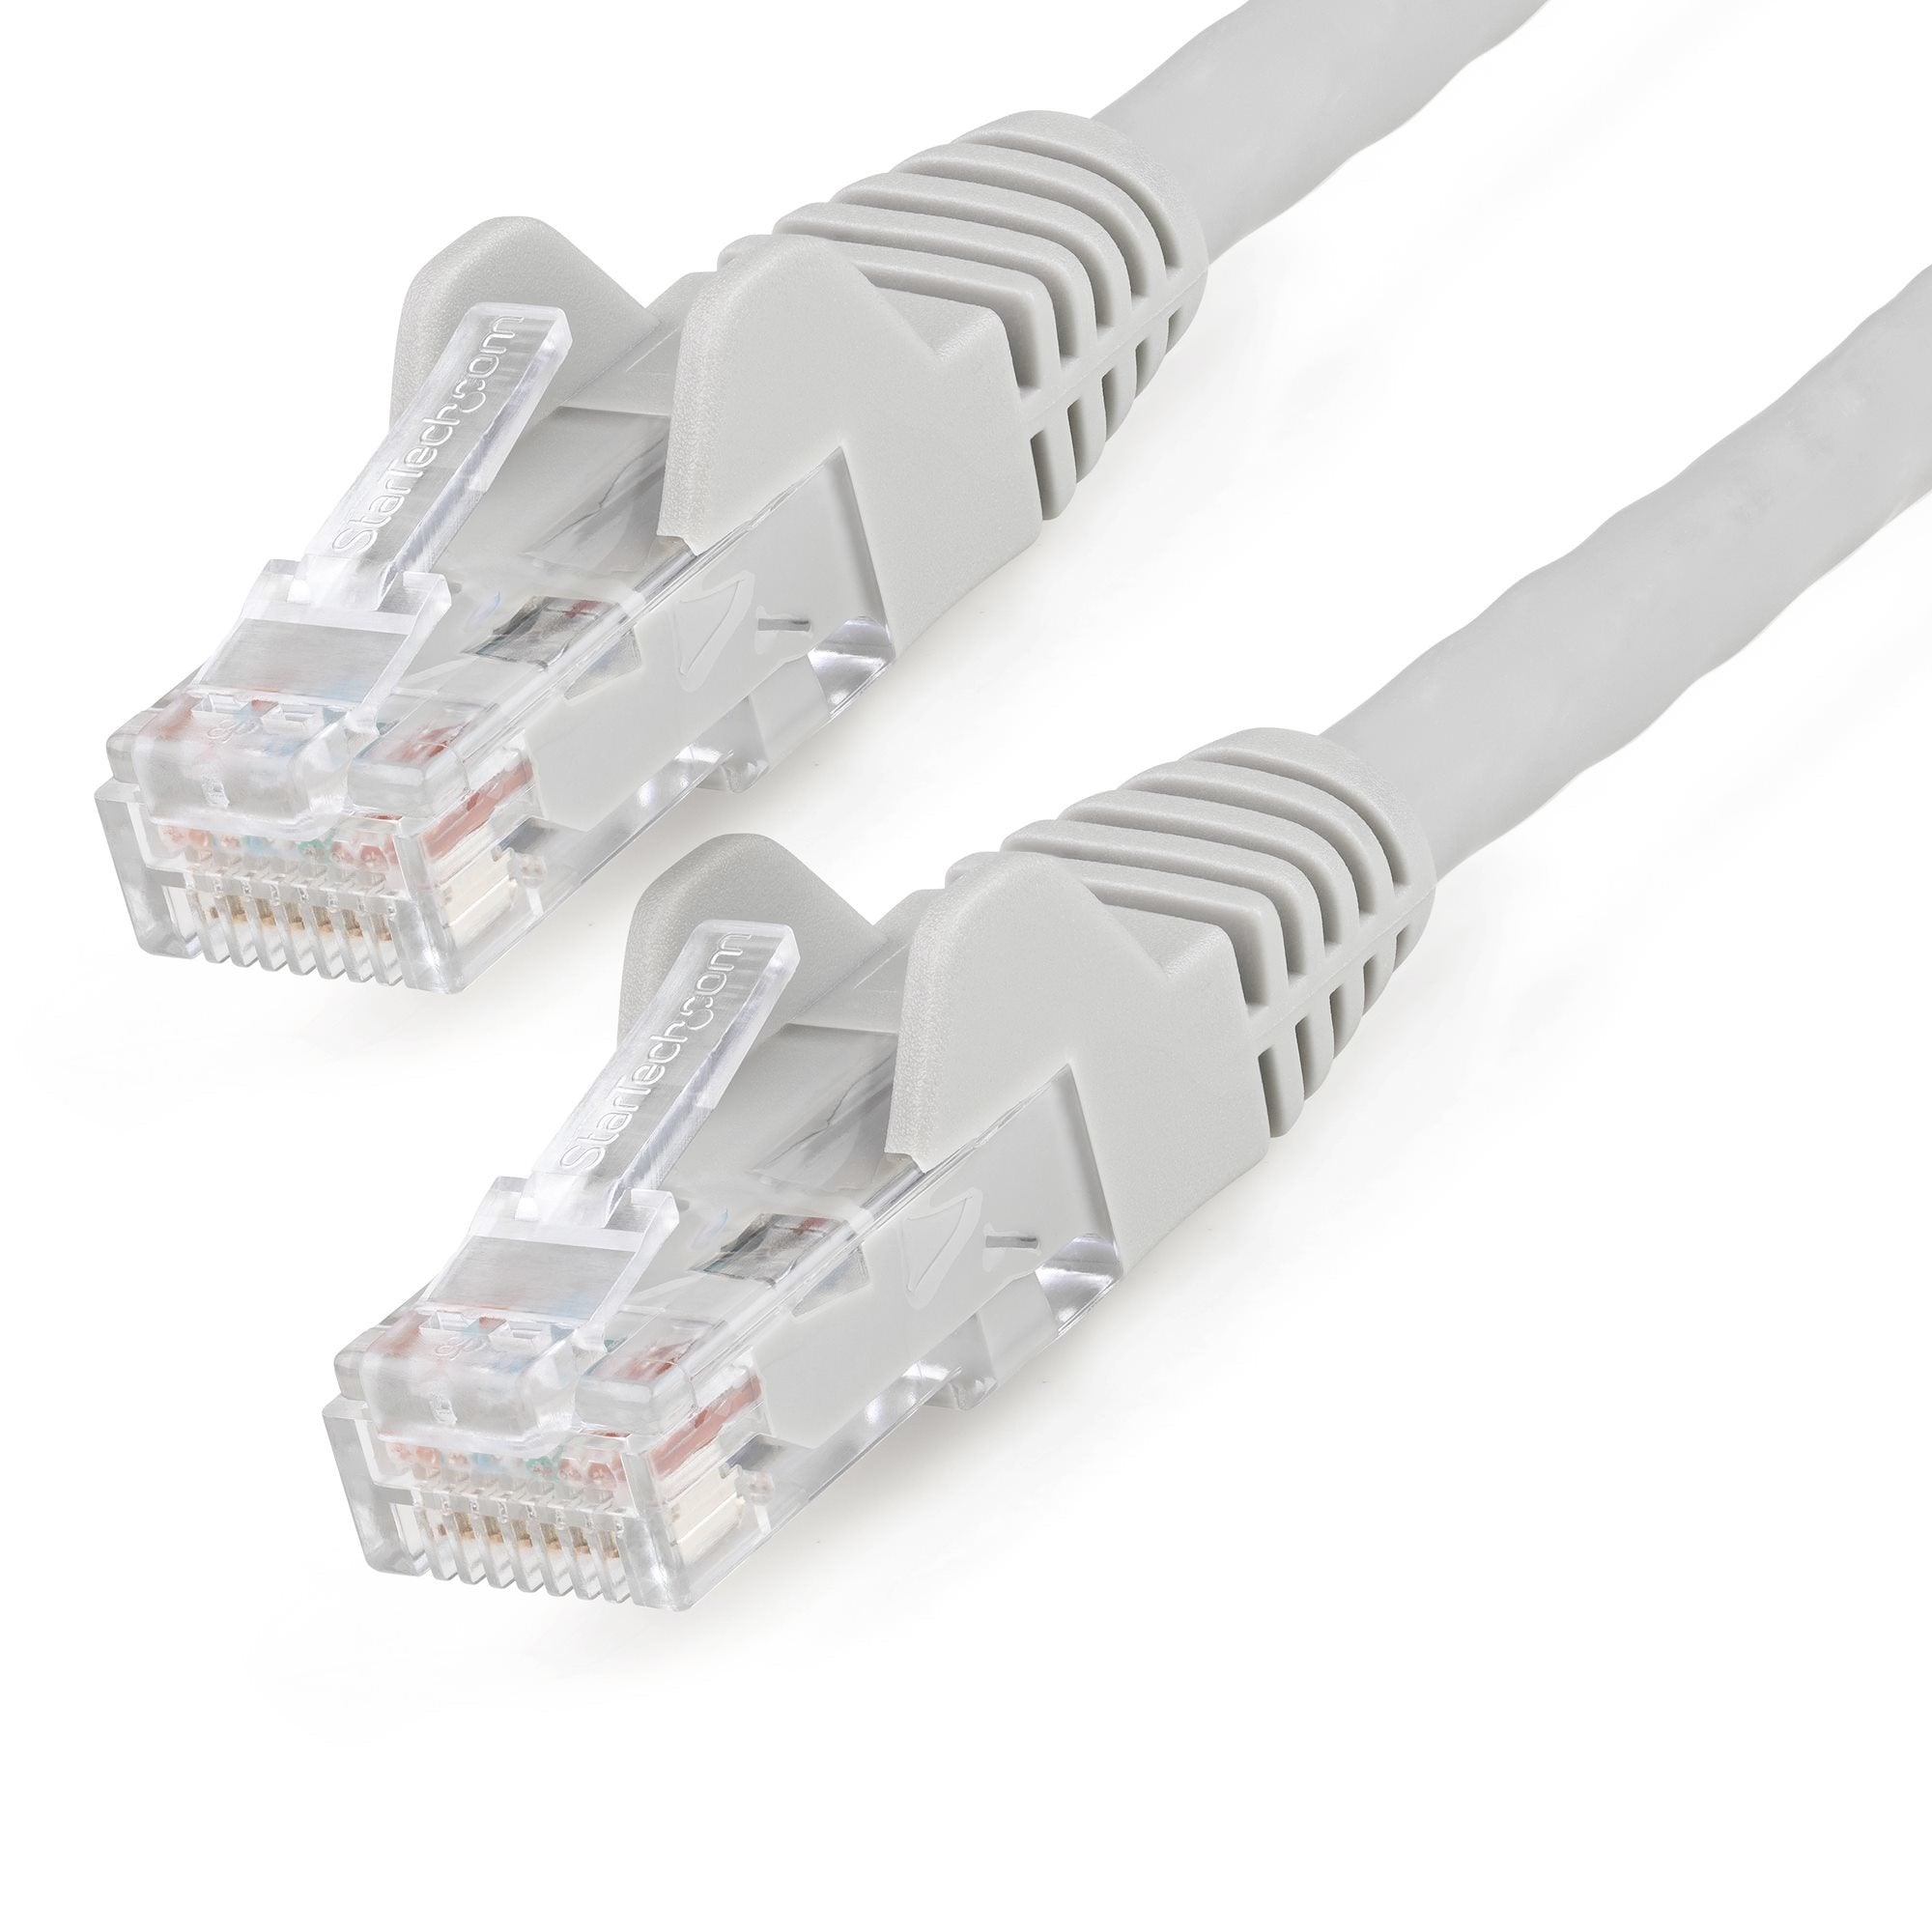 StarTech.com 1m CAT6 Ethernet Cable - LSZH (Low Smoke Zero Halogen) - 10 Gigabit 650MHz 100W PoE RJ45 10GbE UTP Network Patch Cord Snagless with Strain Relief - Grey, CAT 6, ETL Verified, 24AWG